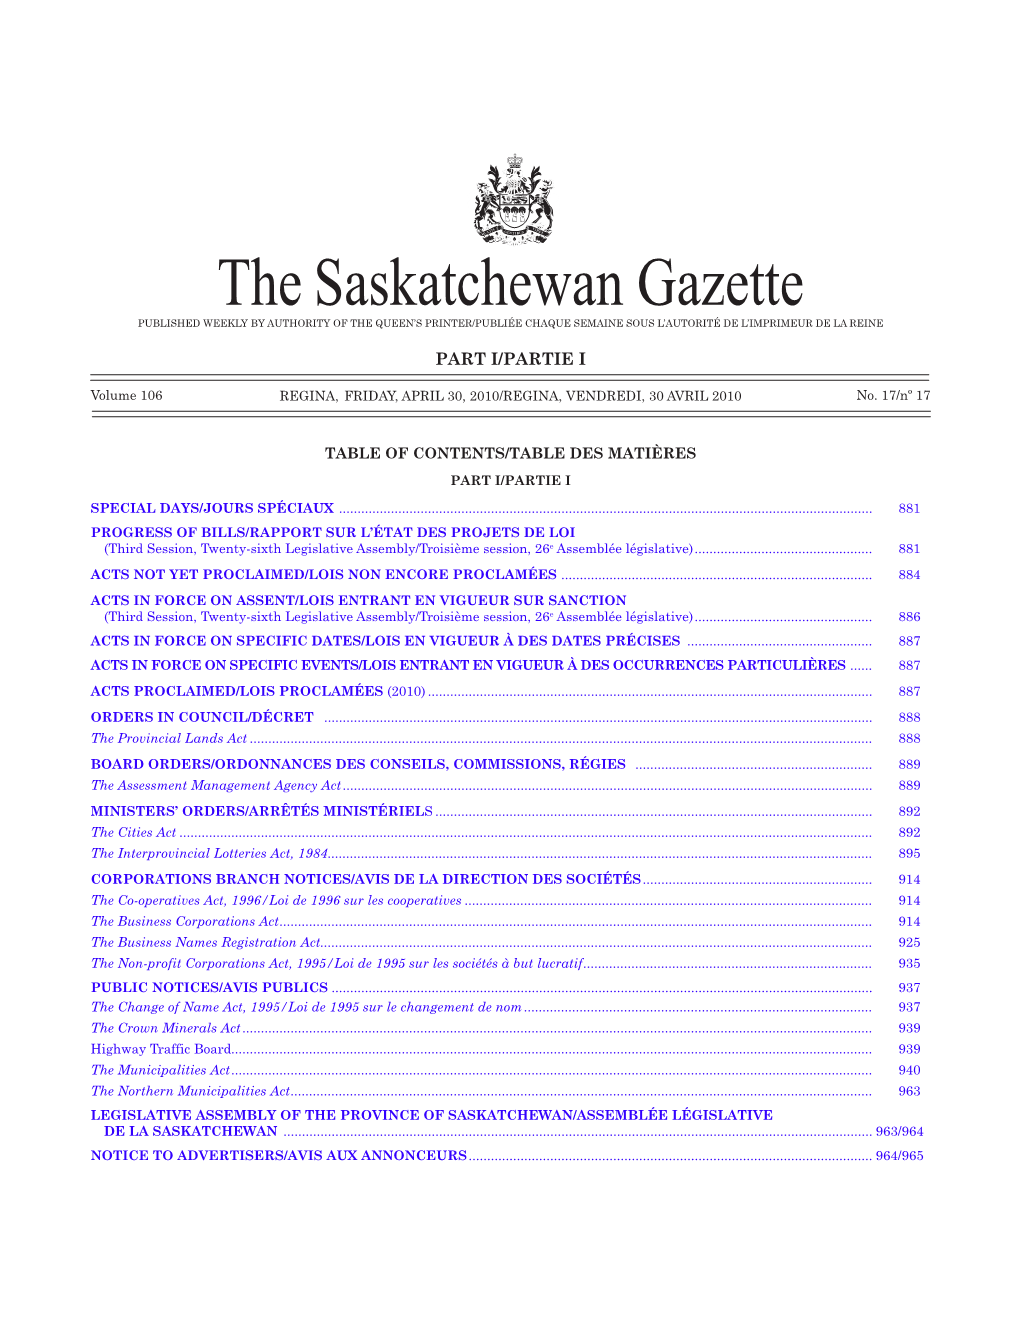 Sask Gazette, Part I, April 30, 2010